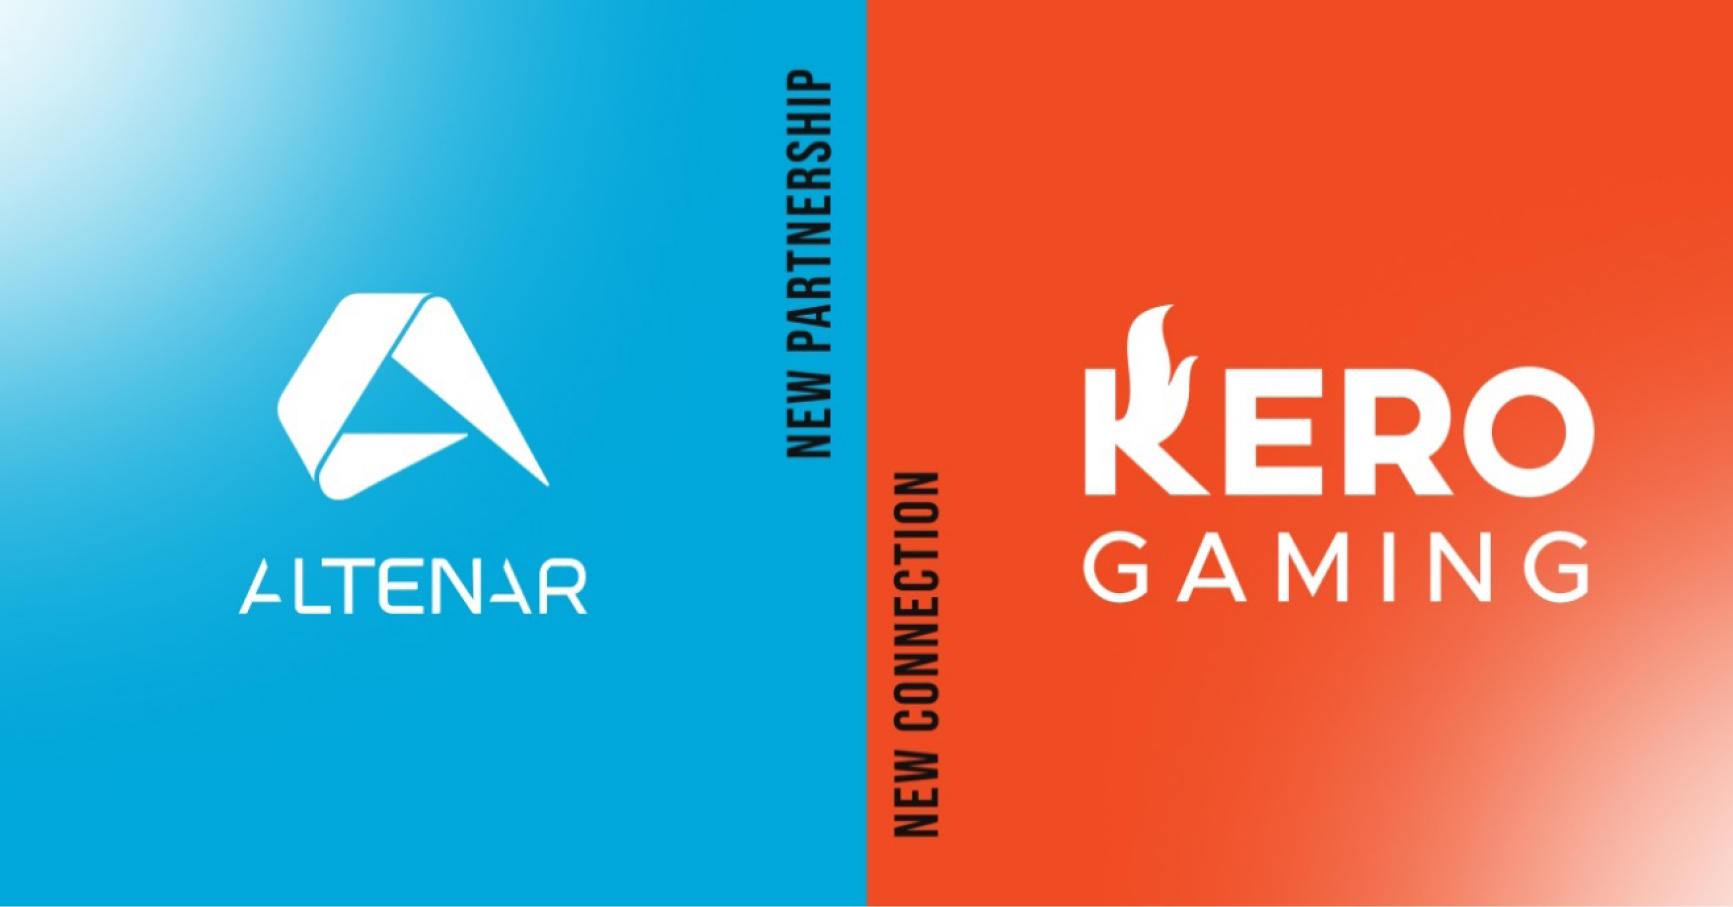 Altenar announces Kero Gaming partnership to bolster micro-betting offering